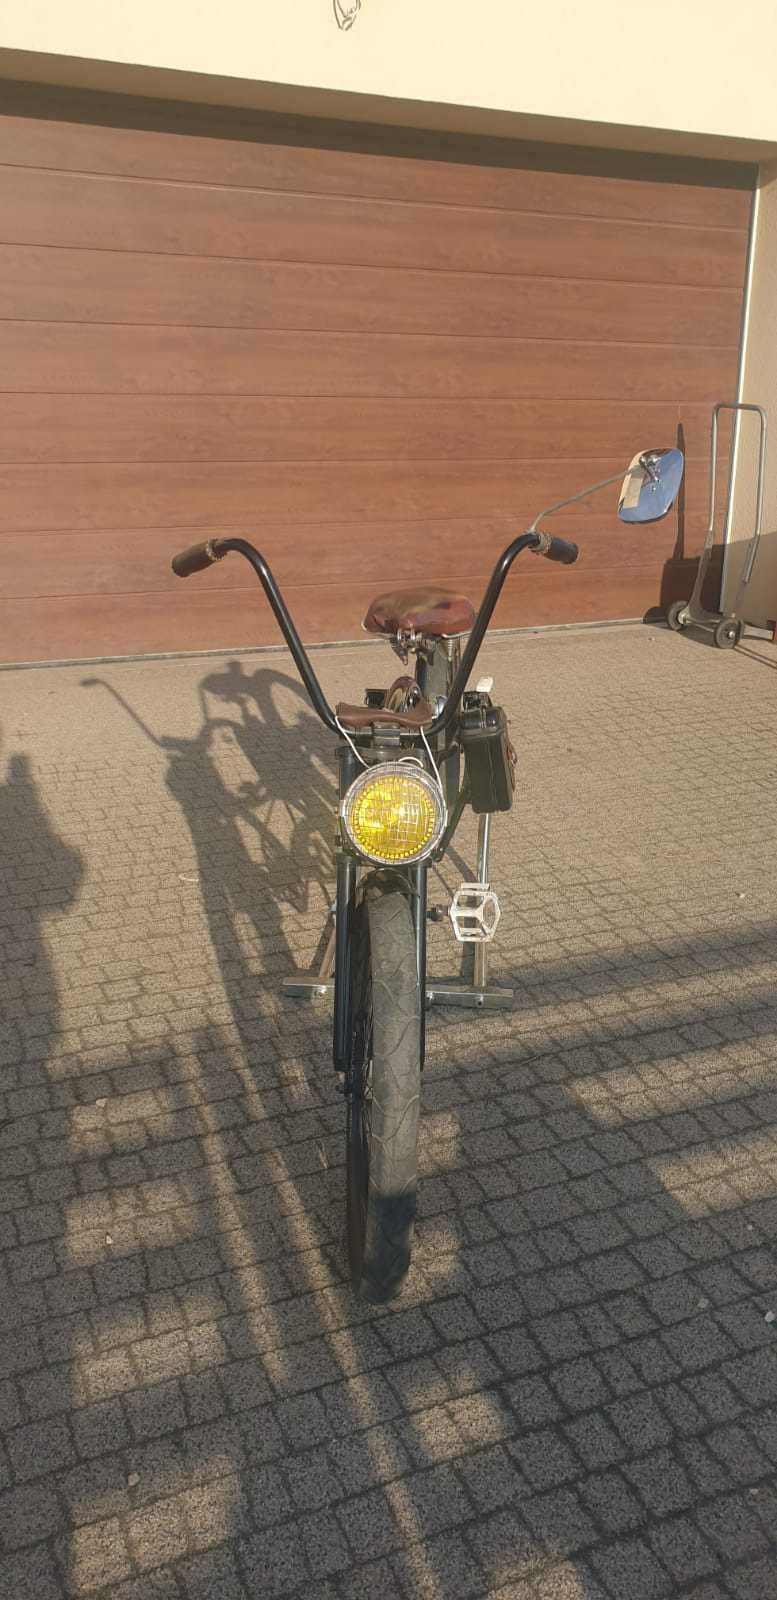 Rower custom na wzór motocykla